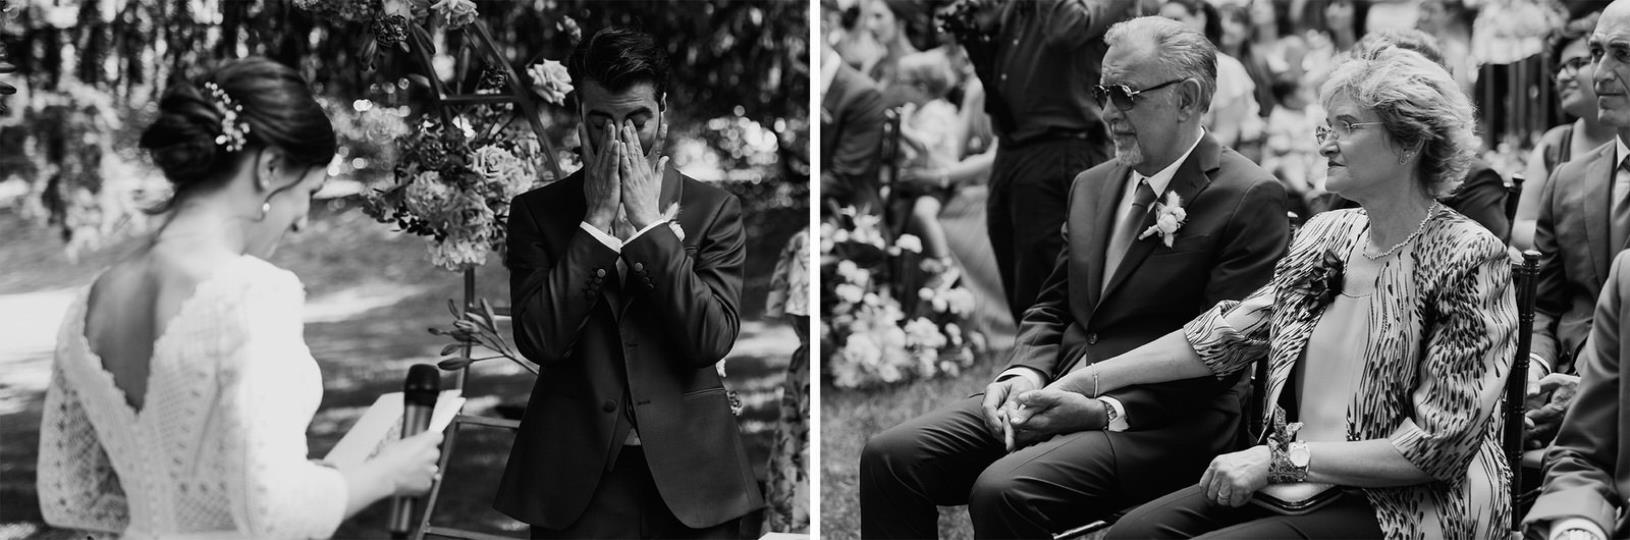 italian wedding photographer | Laura Stramacchia | Wedding Photography